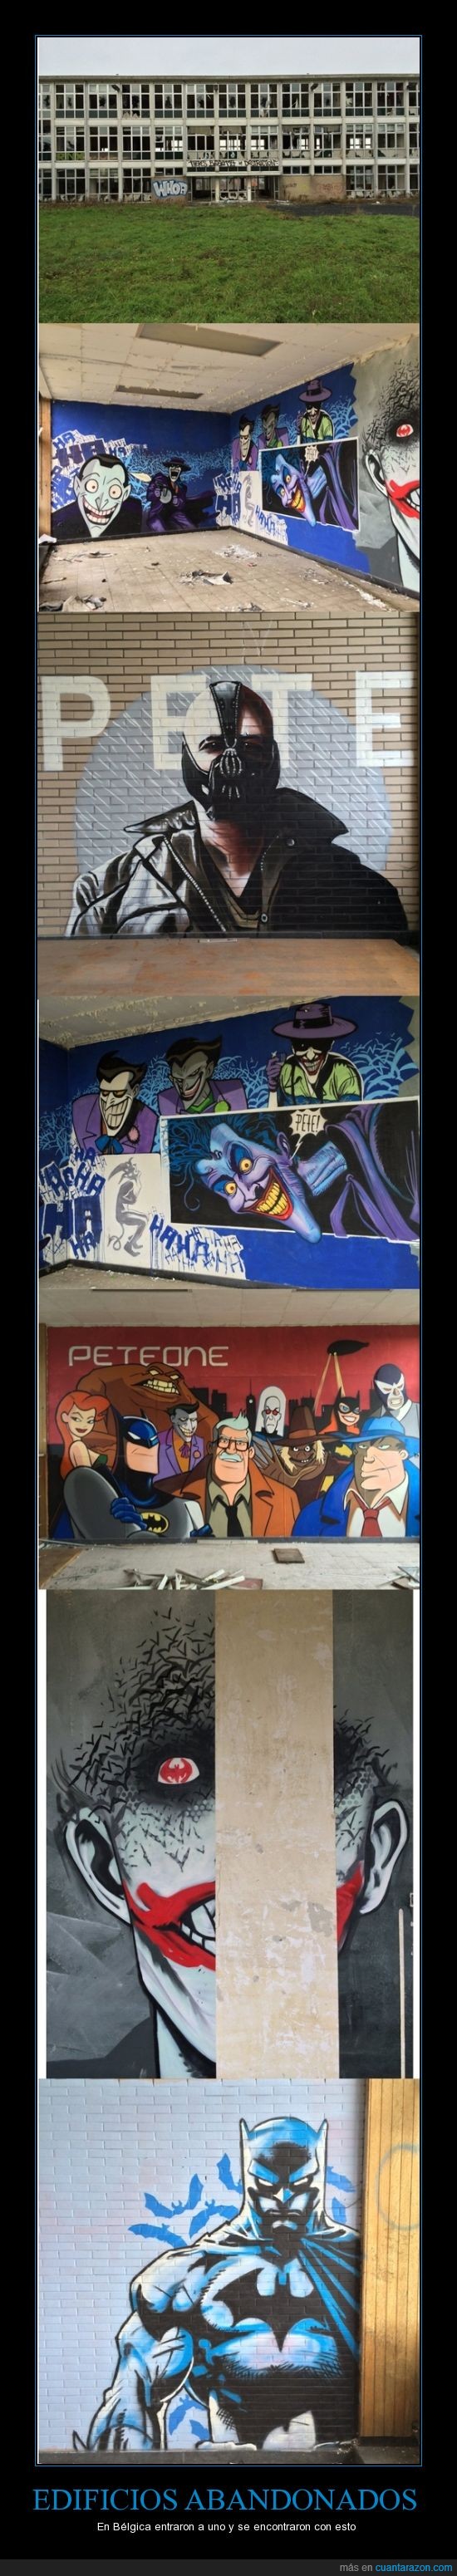 joker,batman,graffiti,pared,pintado,arte,callejero,bane